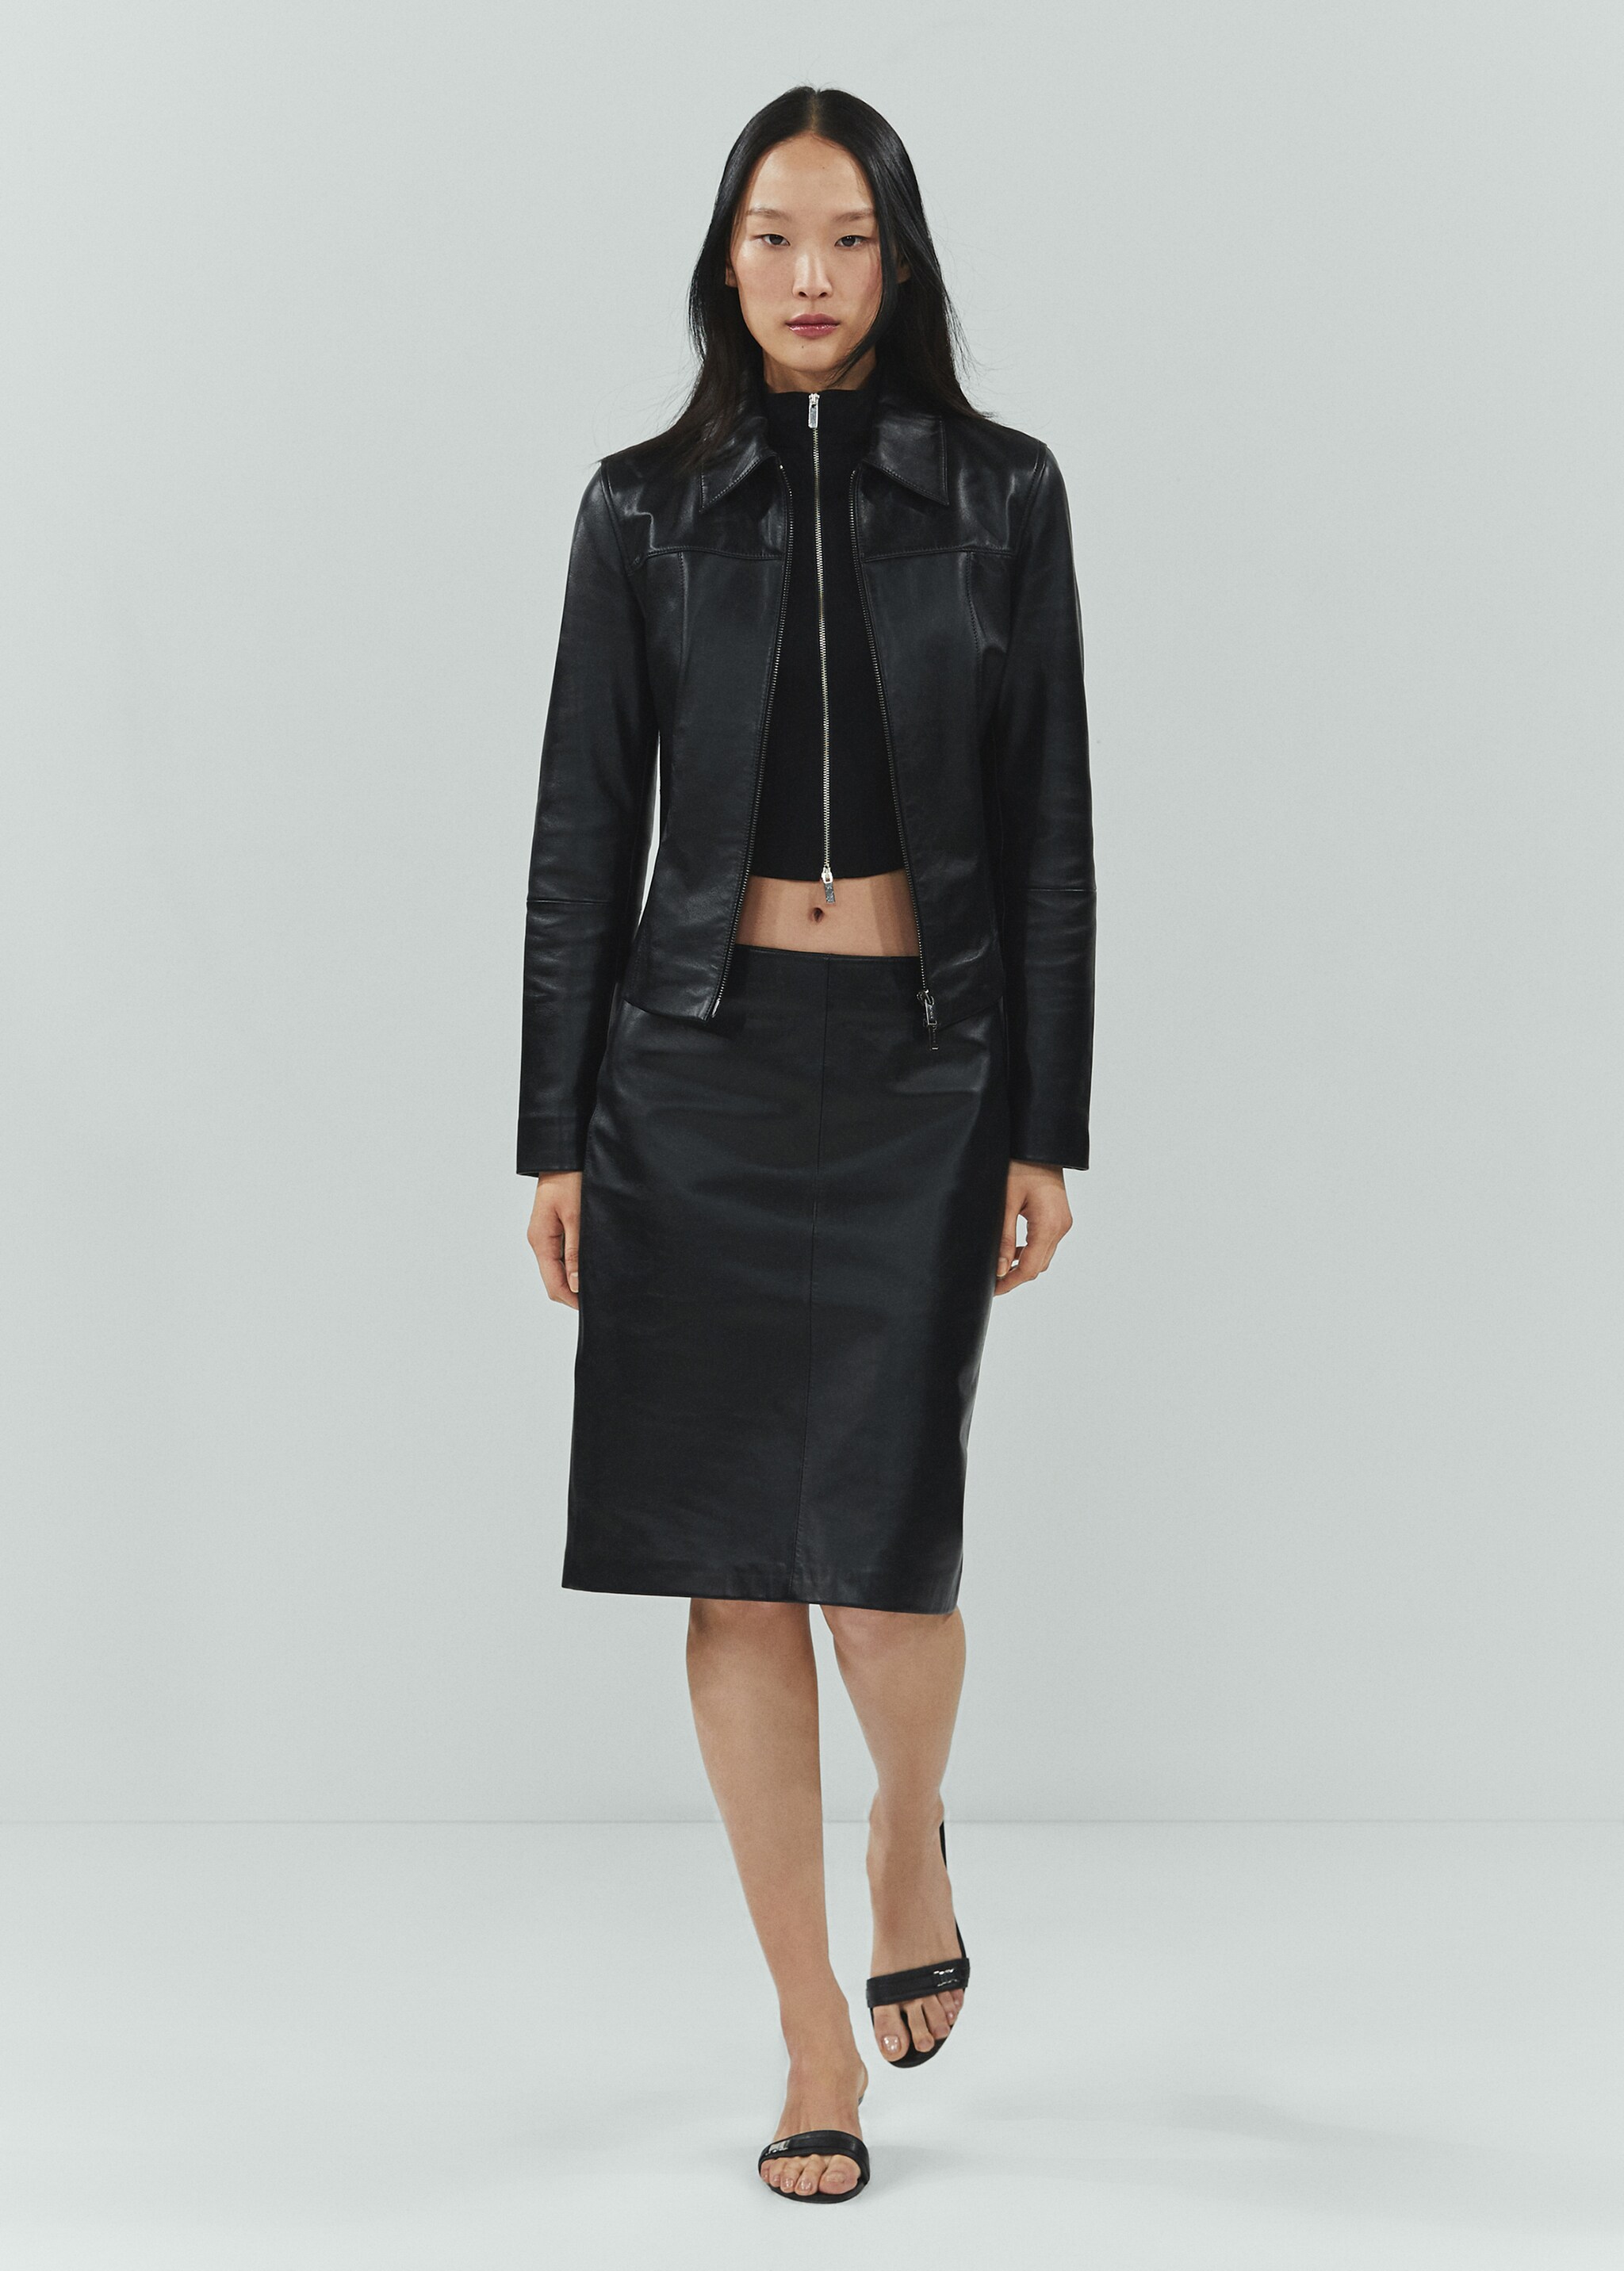 100% leather midi skirt - General plane